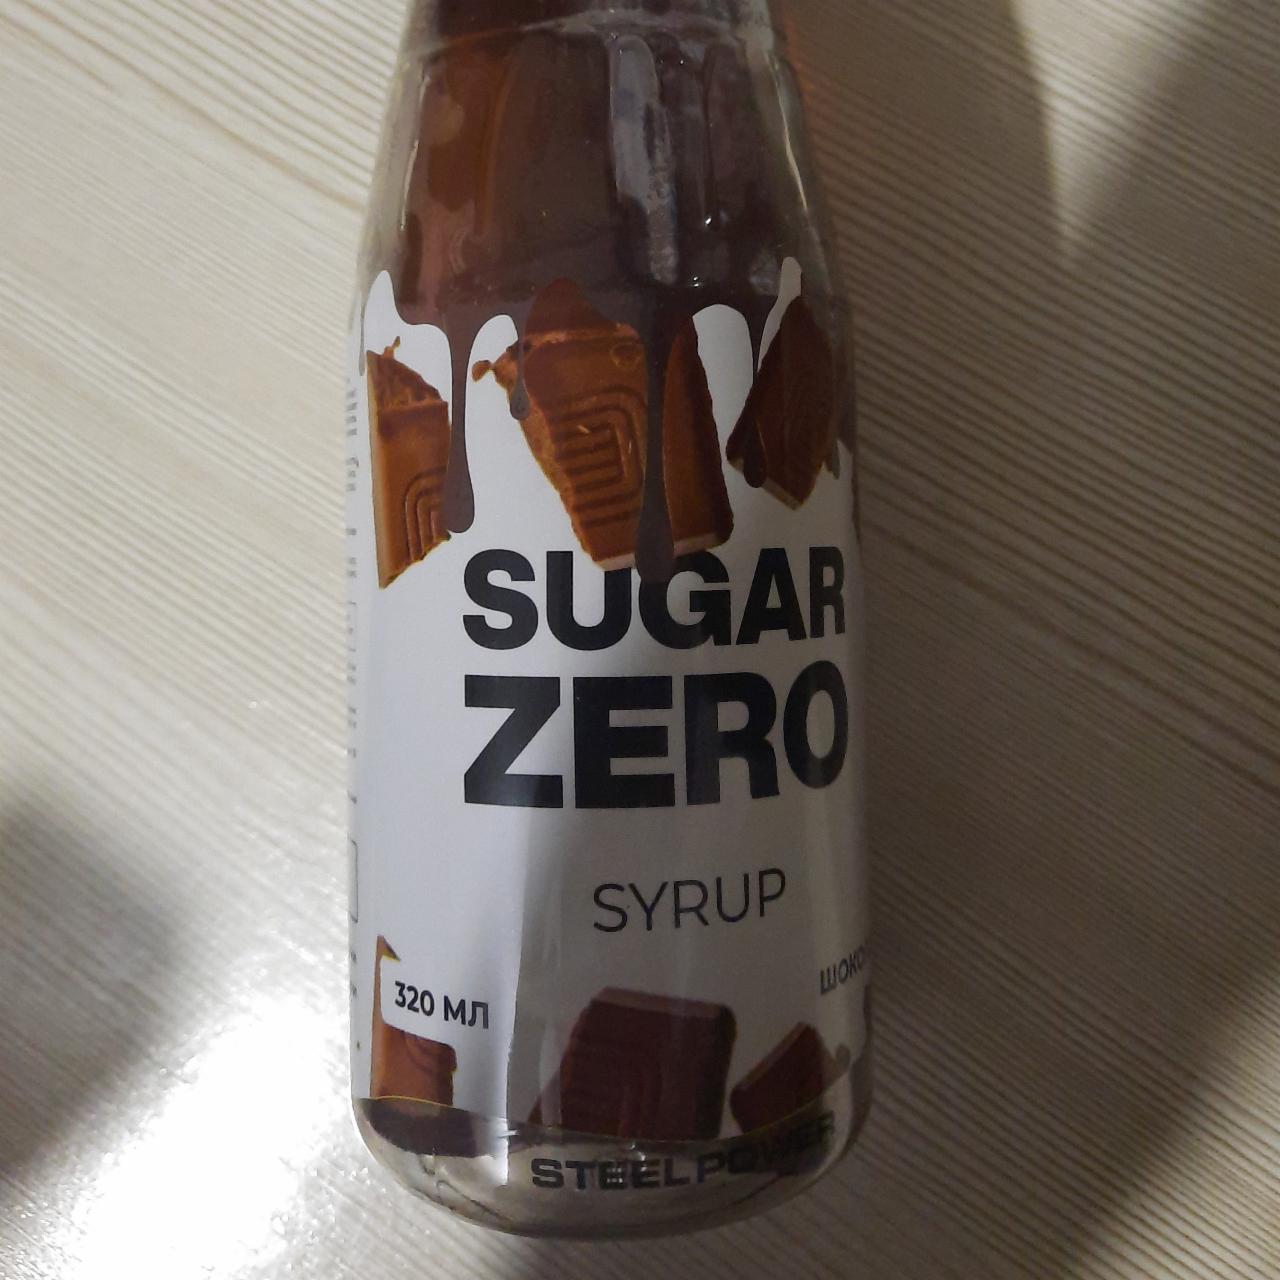 Фото - Sugar Zero syrup шоколад SteelPower